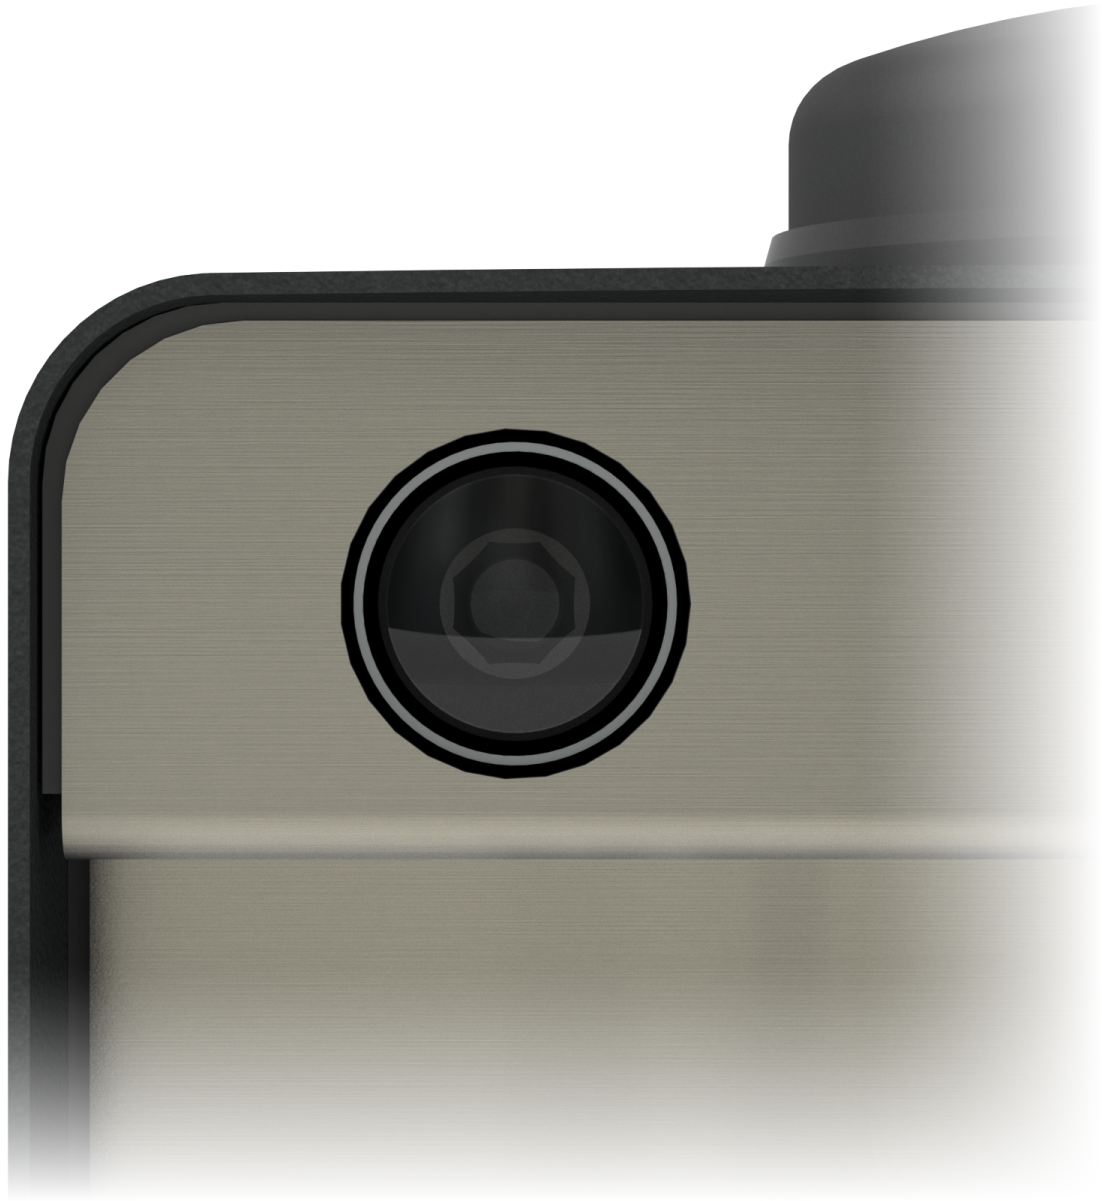 Smartphone Camera Close Up View PNG image